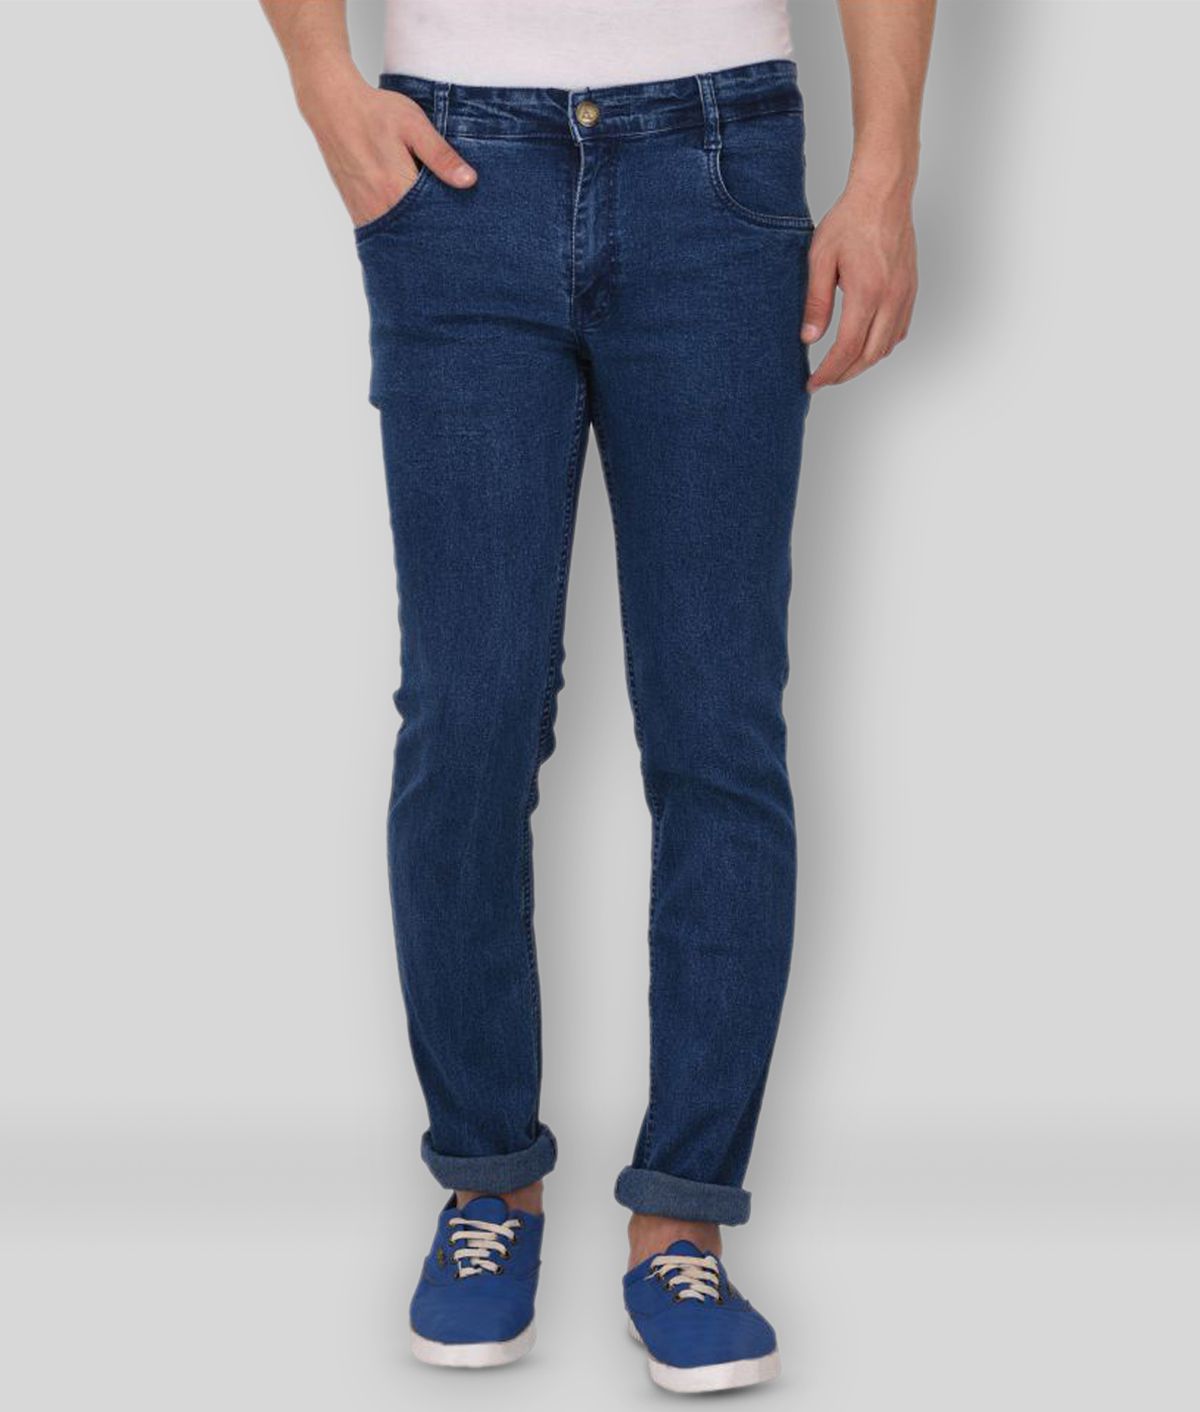 Studio Nexx - Dark Blue Cotton Blend Regular Fit Men's Jeans ( Pack of 1 )